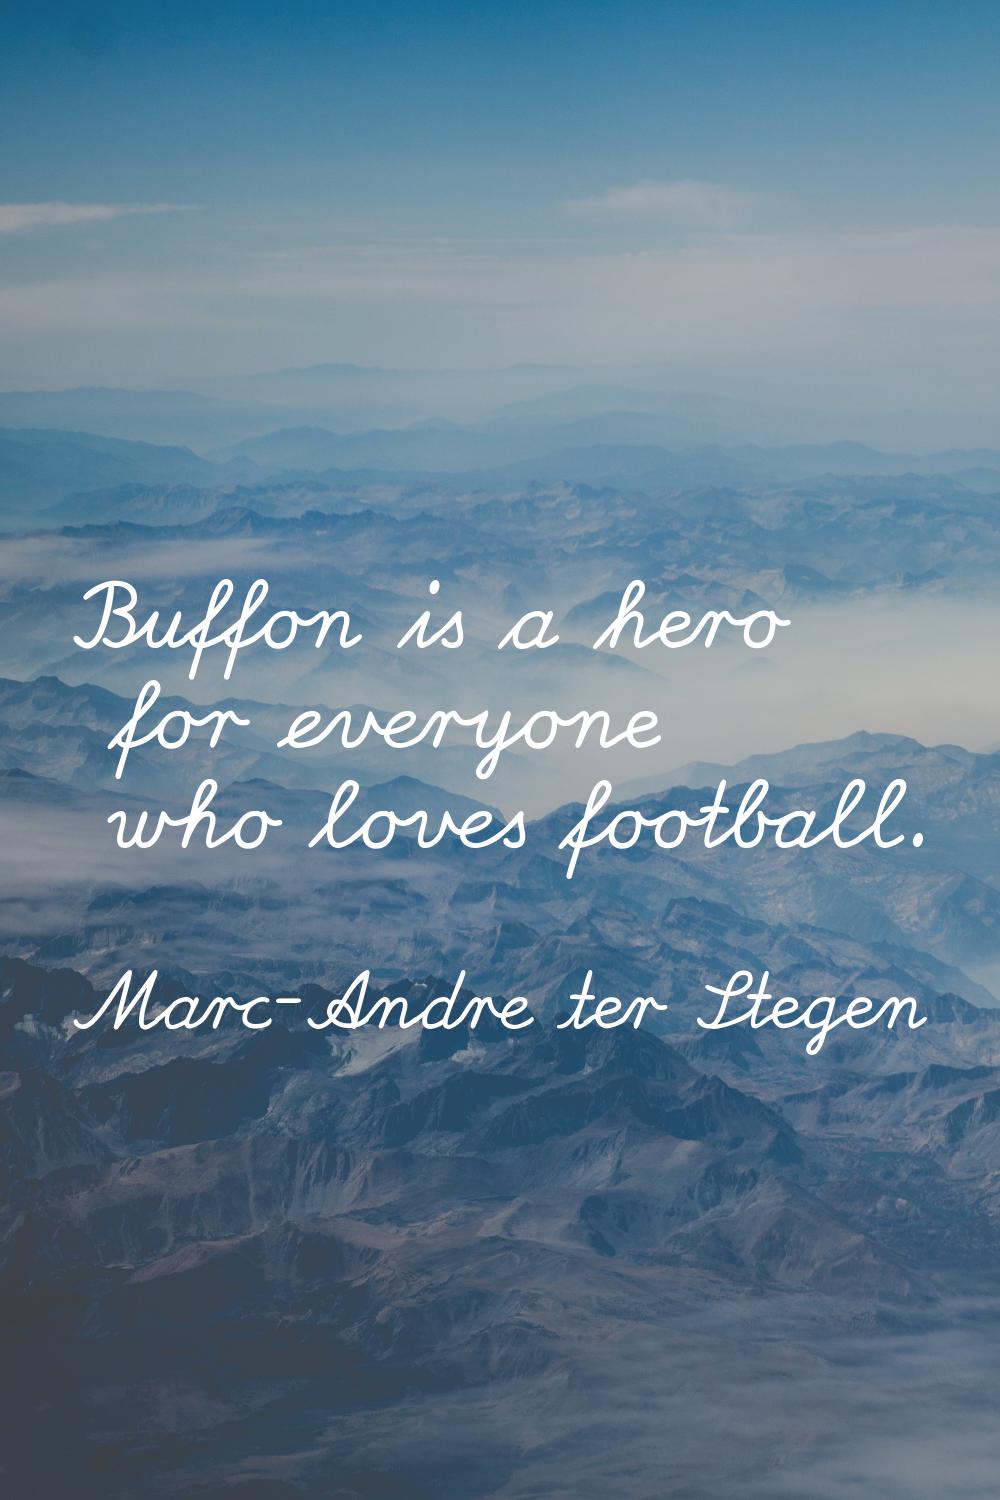 Buffon is a hero for everyone who loves football.